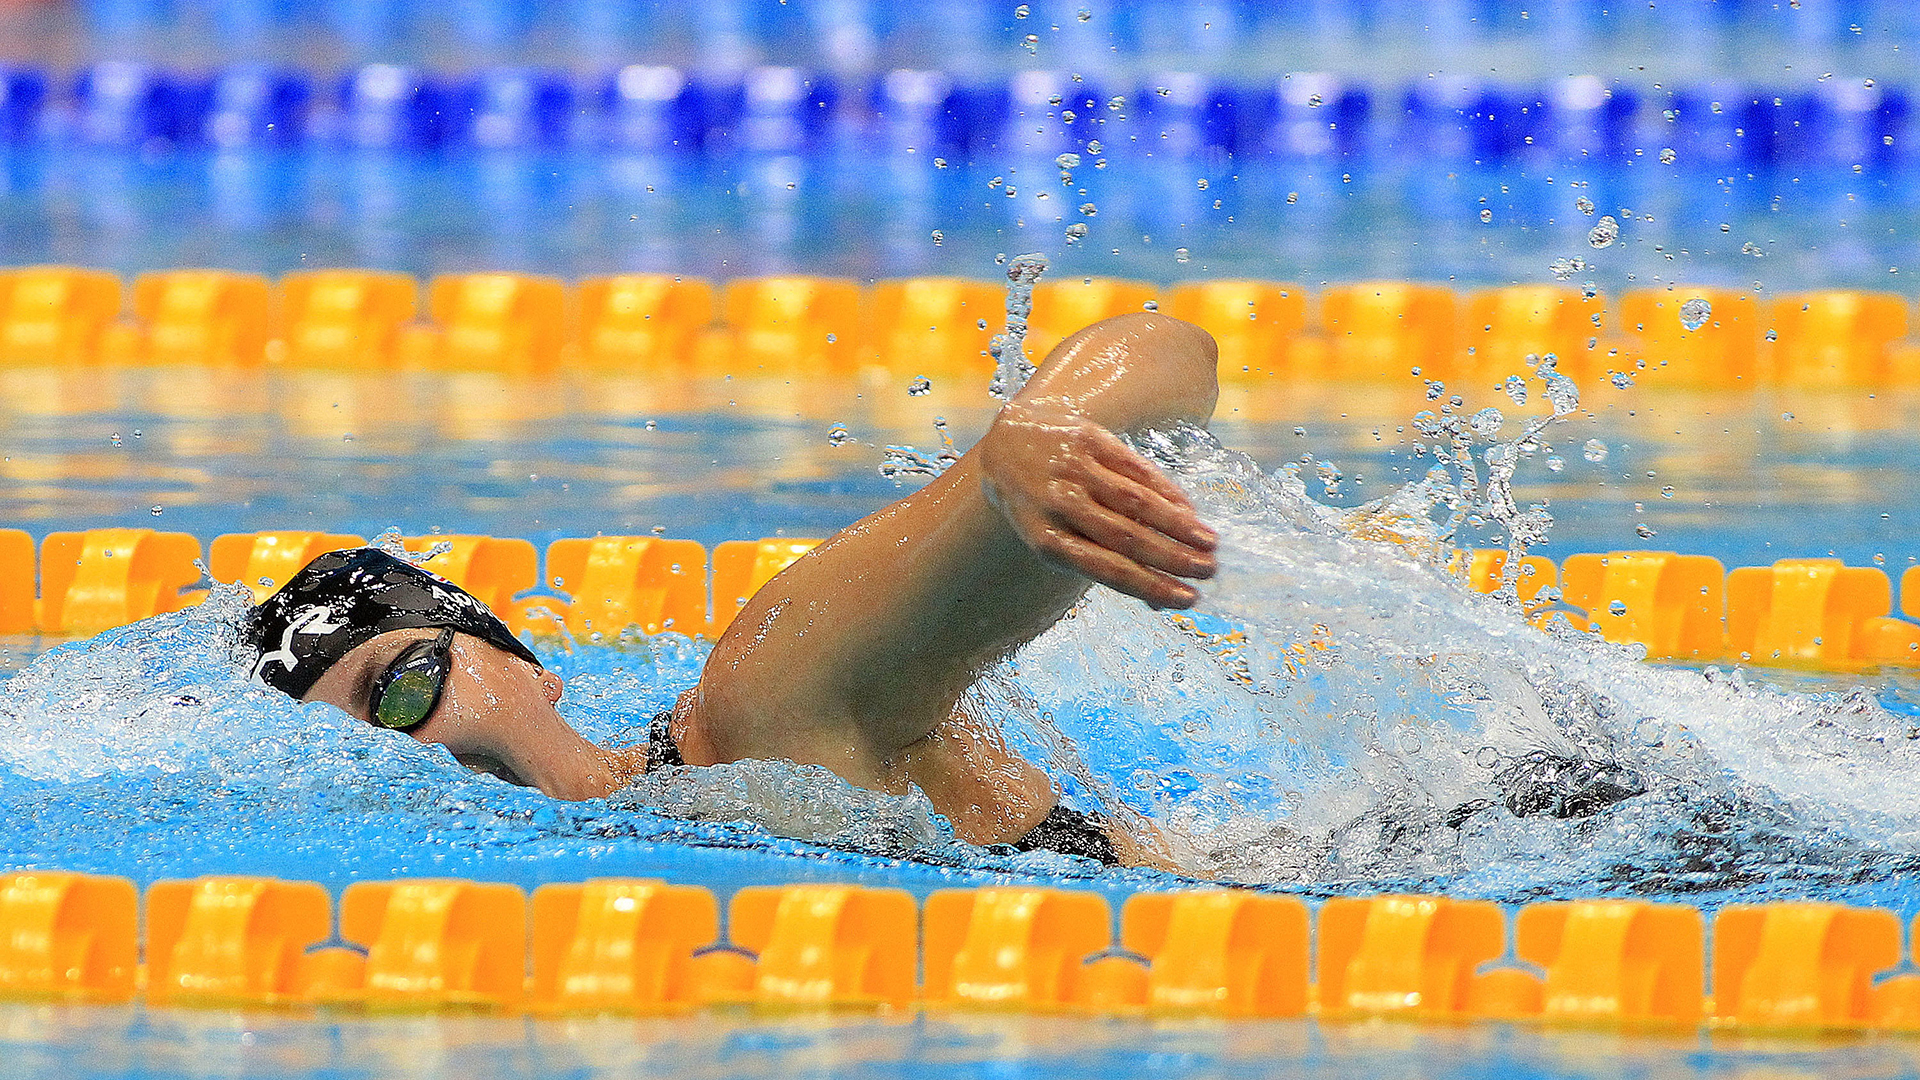 Jessica-Jane Applegate at the 2019 World Para Swimming Allianz Championships